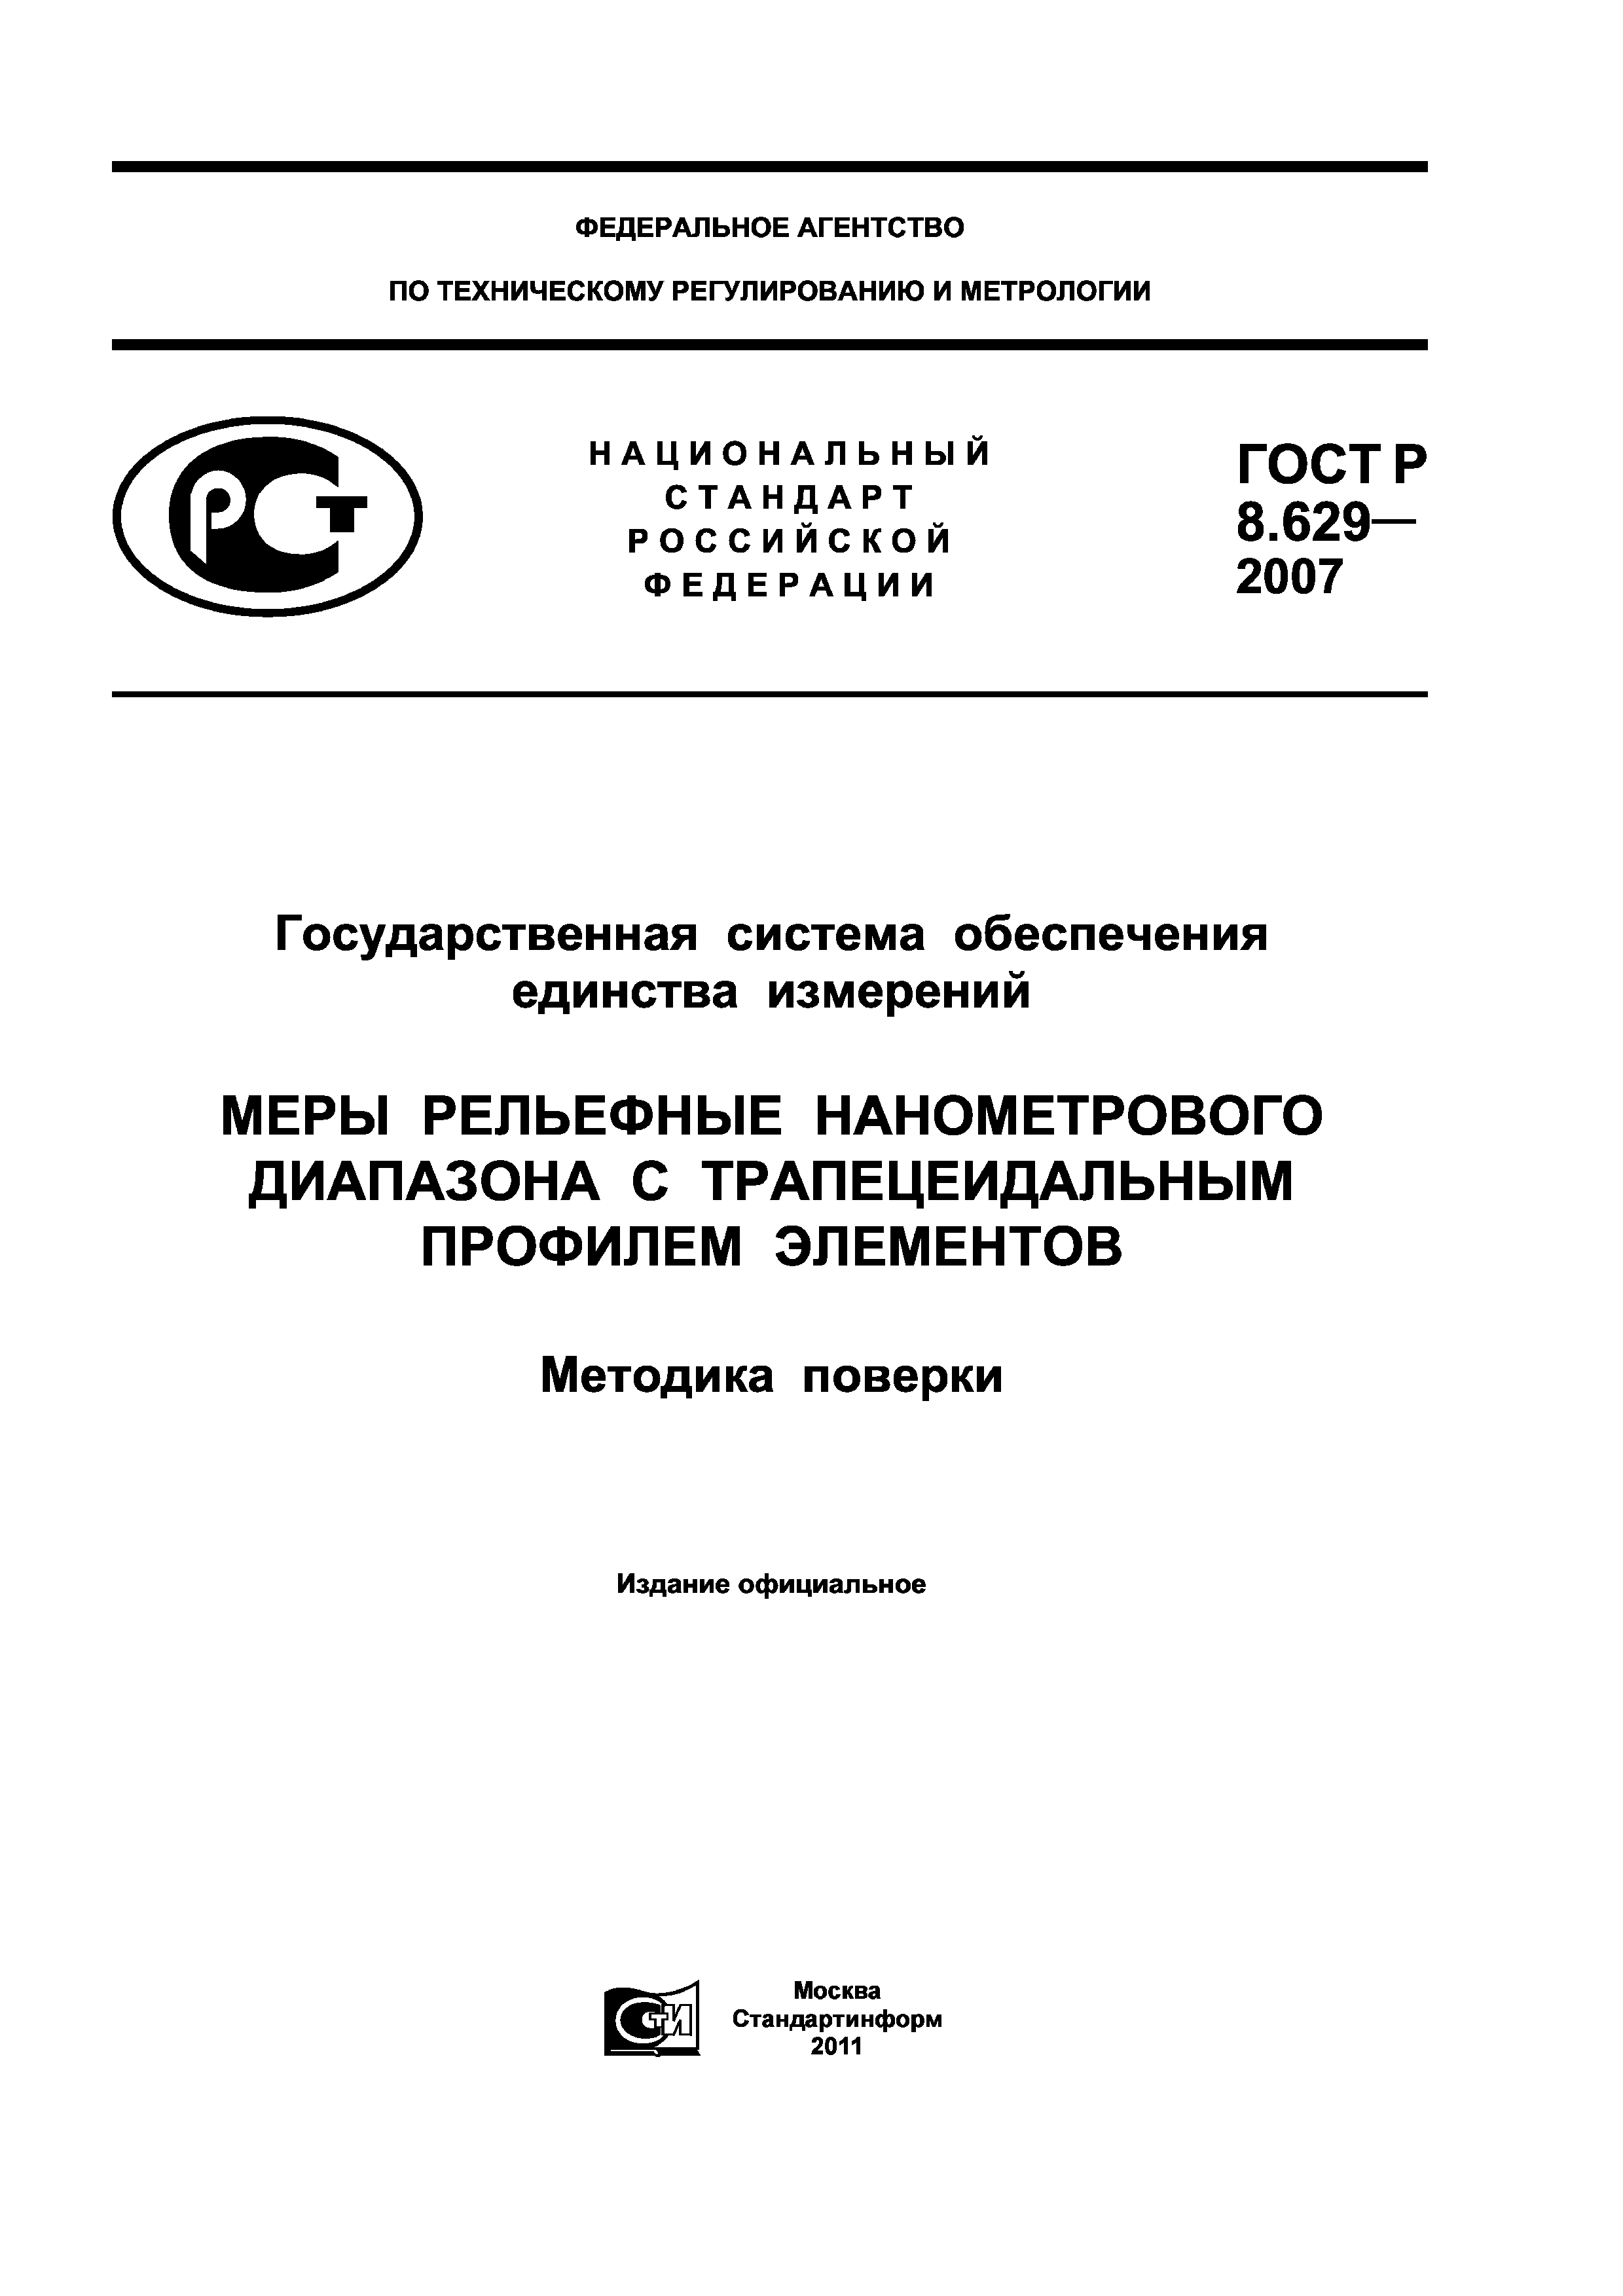 ГОСТ Р 8.629-2007